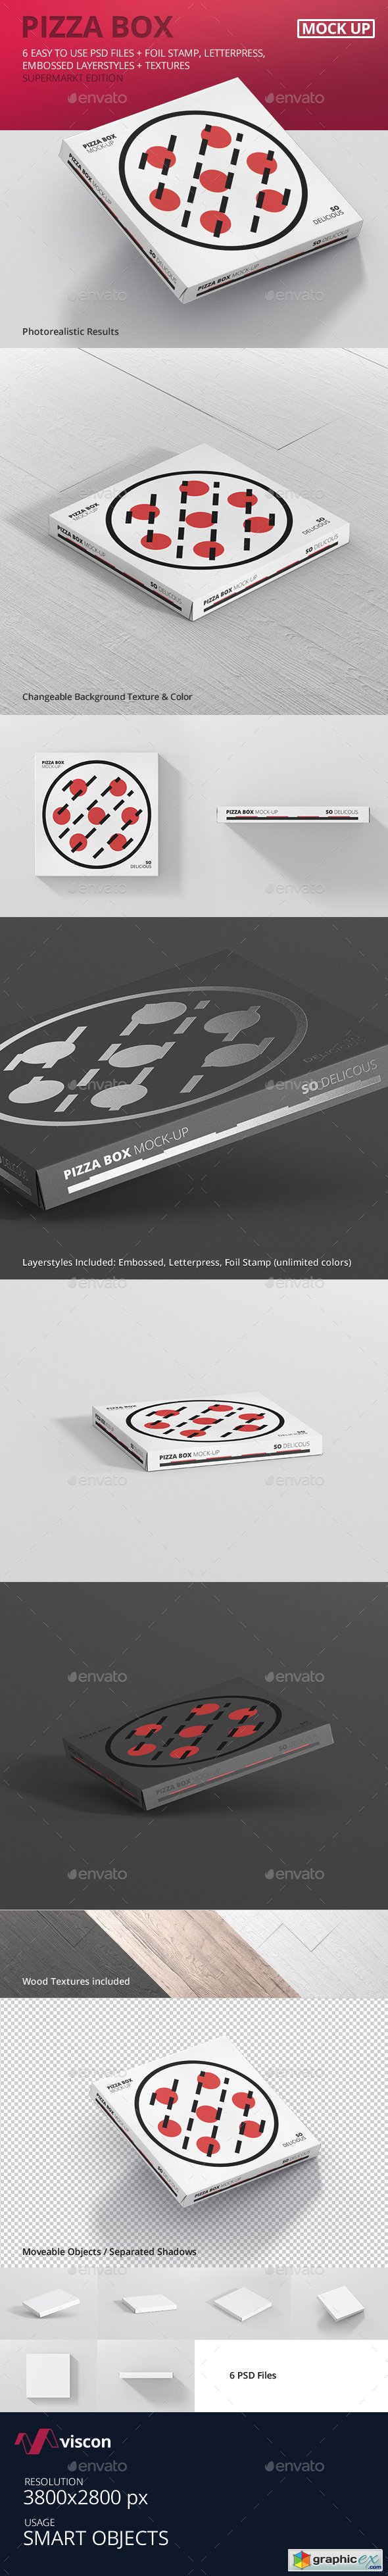 Pizza Box Mock-Up - Supermarket Edition